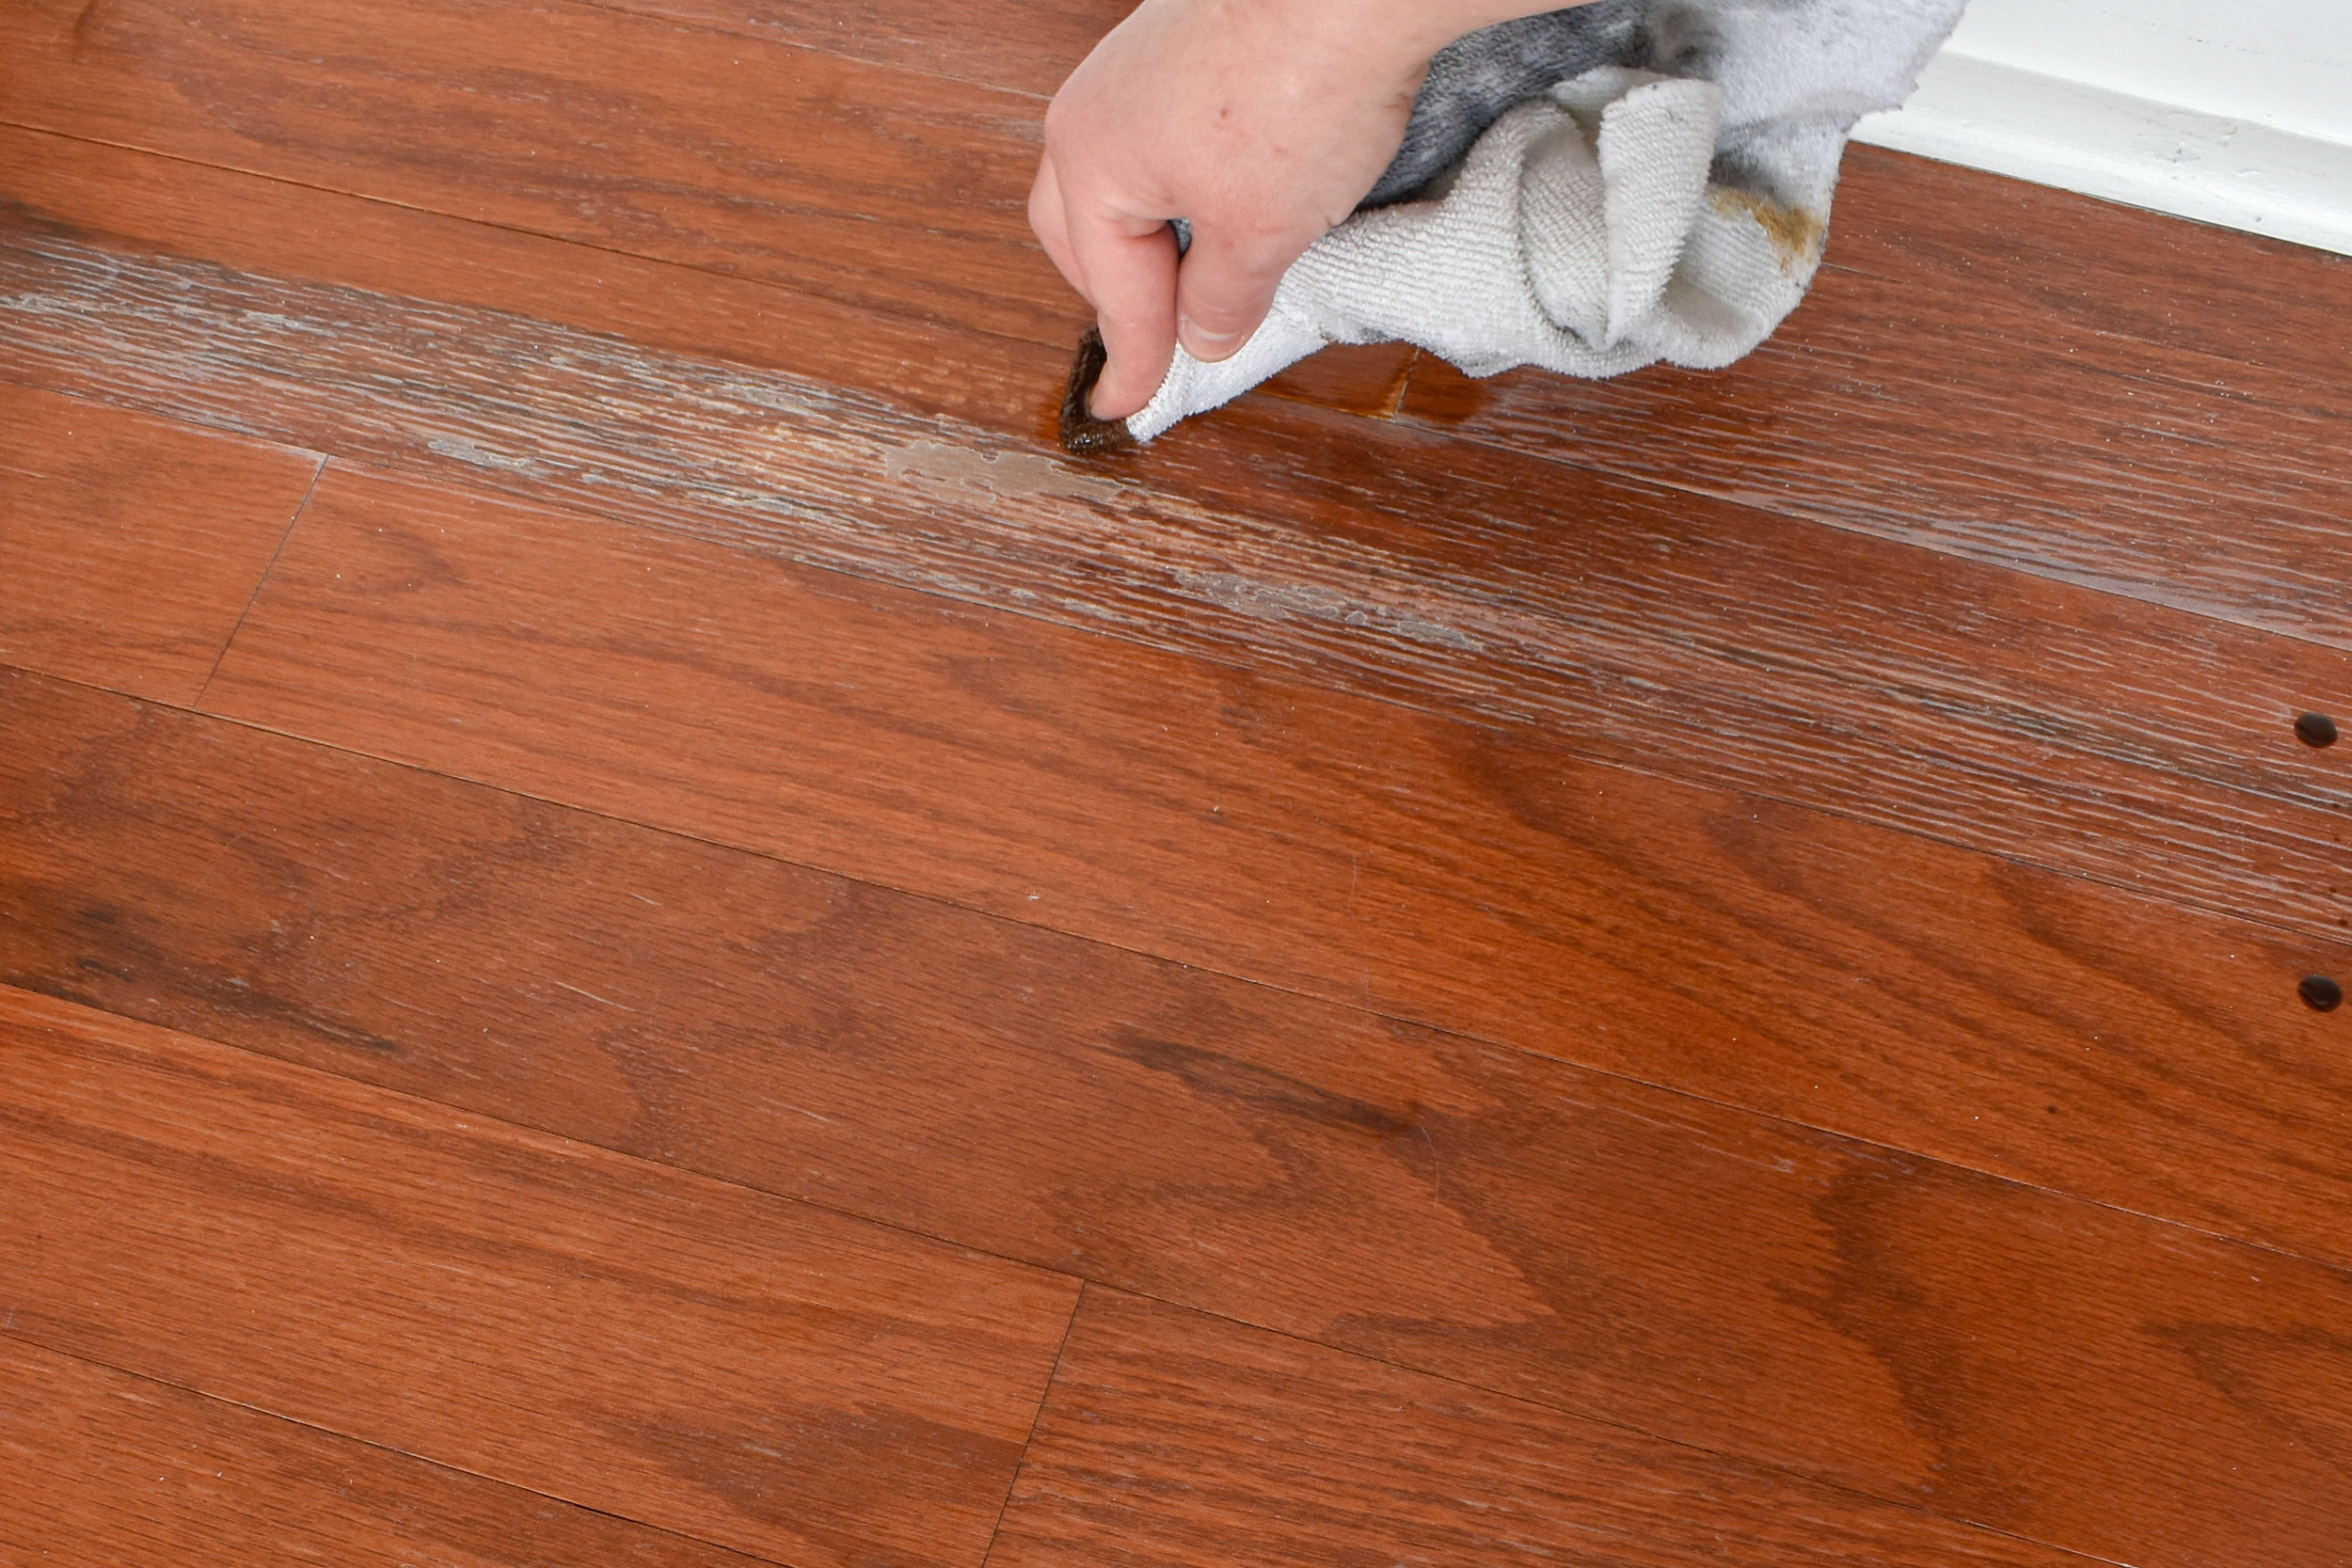 How To Make Old Hardwood Floors Shine, How To Add Shine Old Hardwood Floors